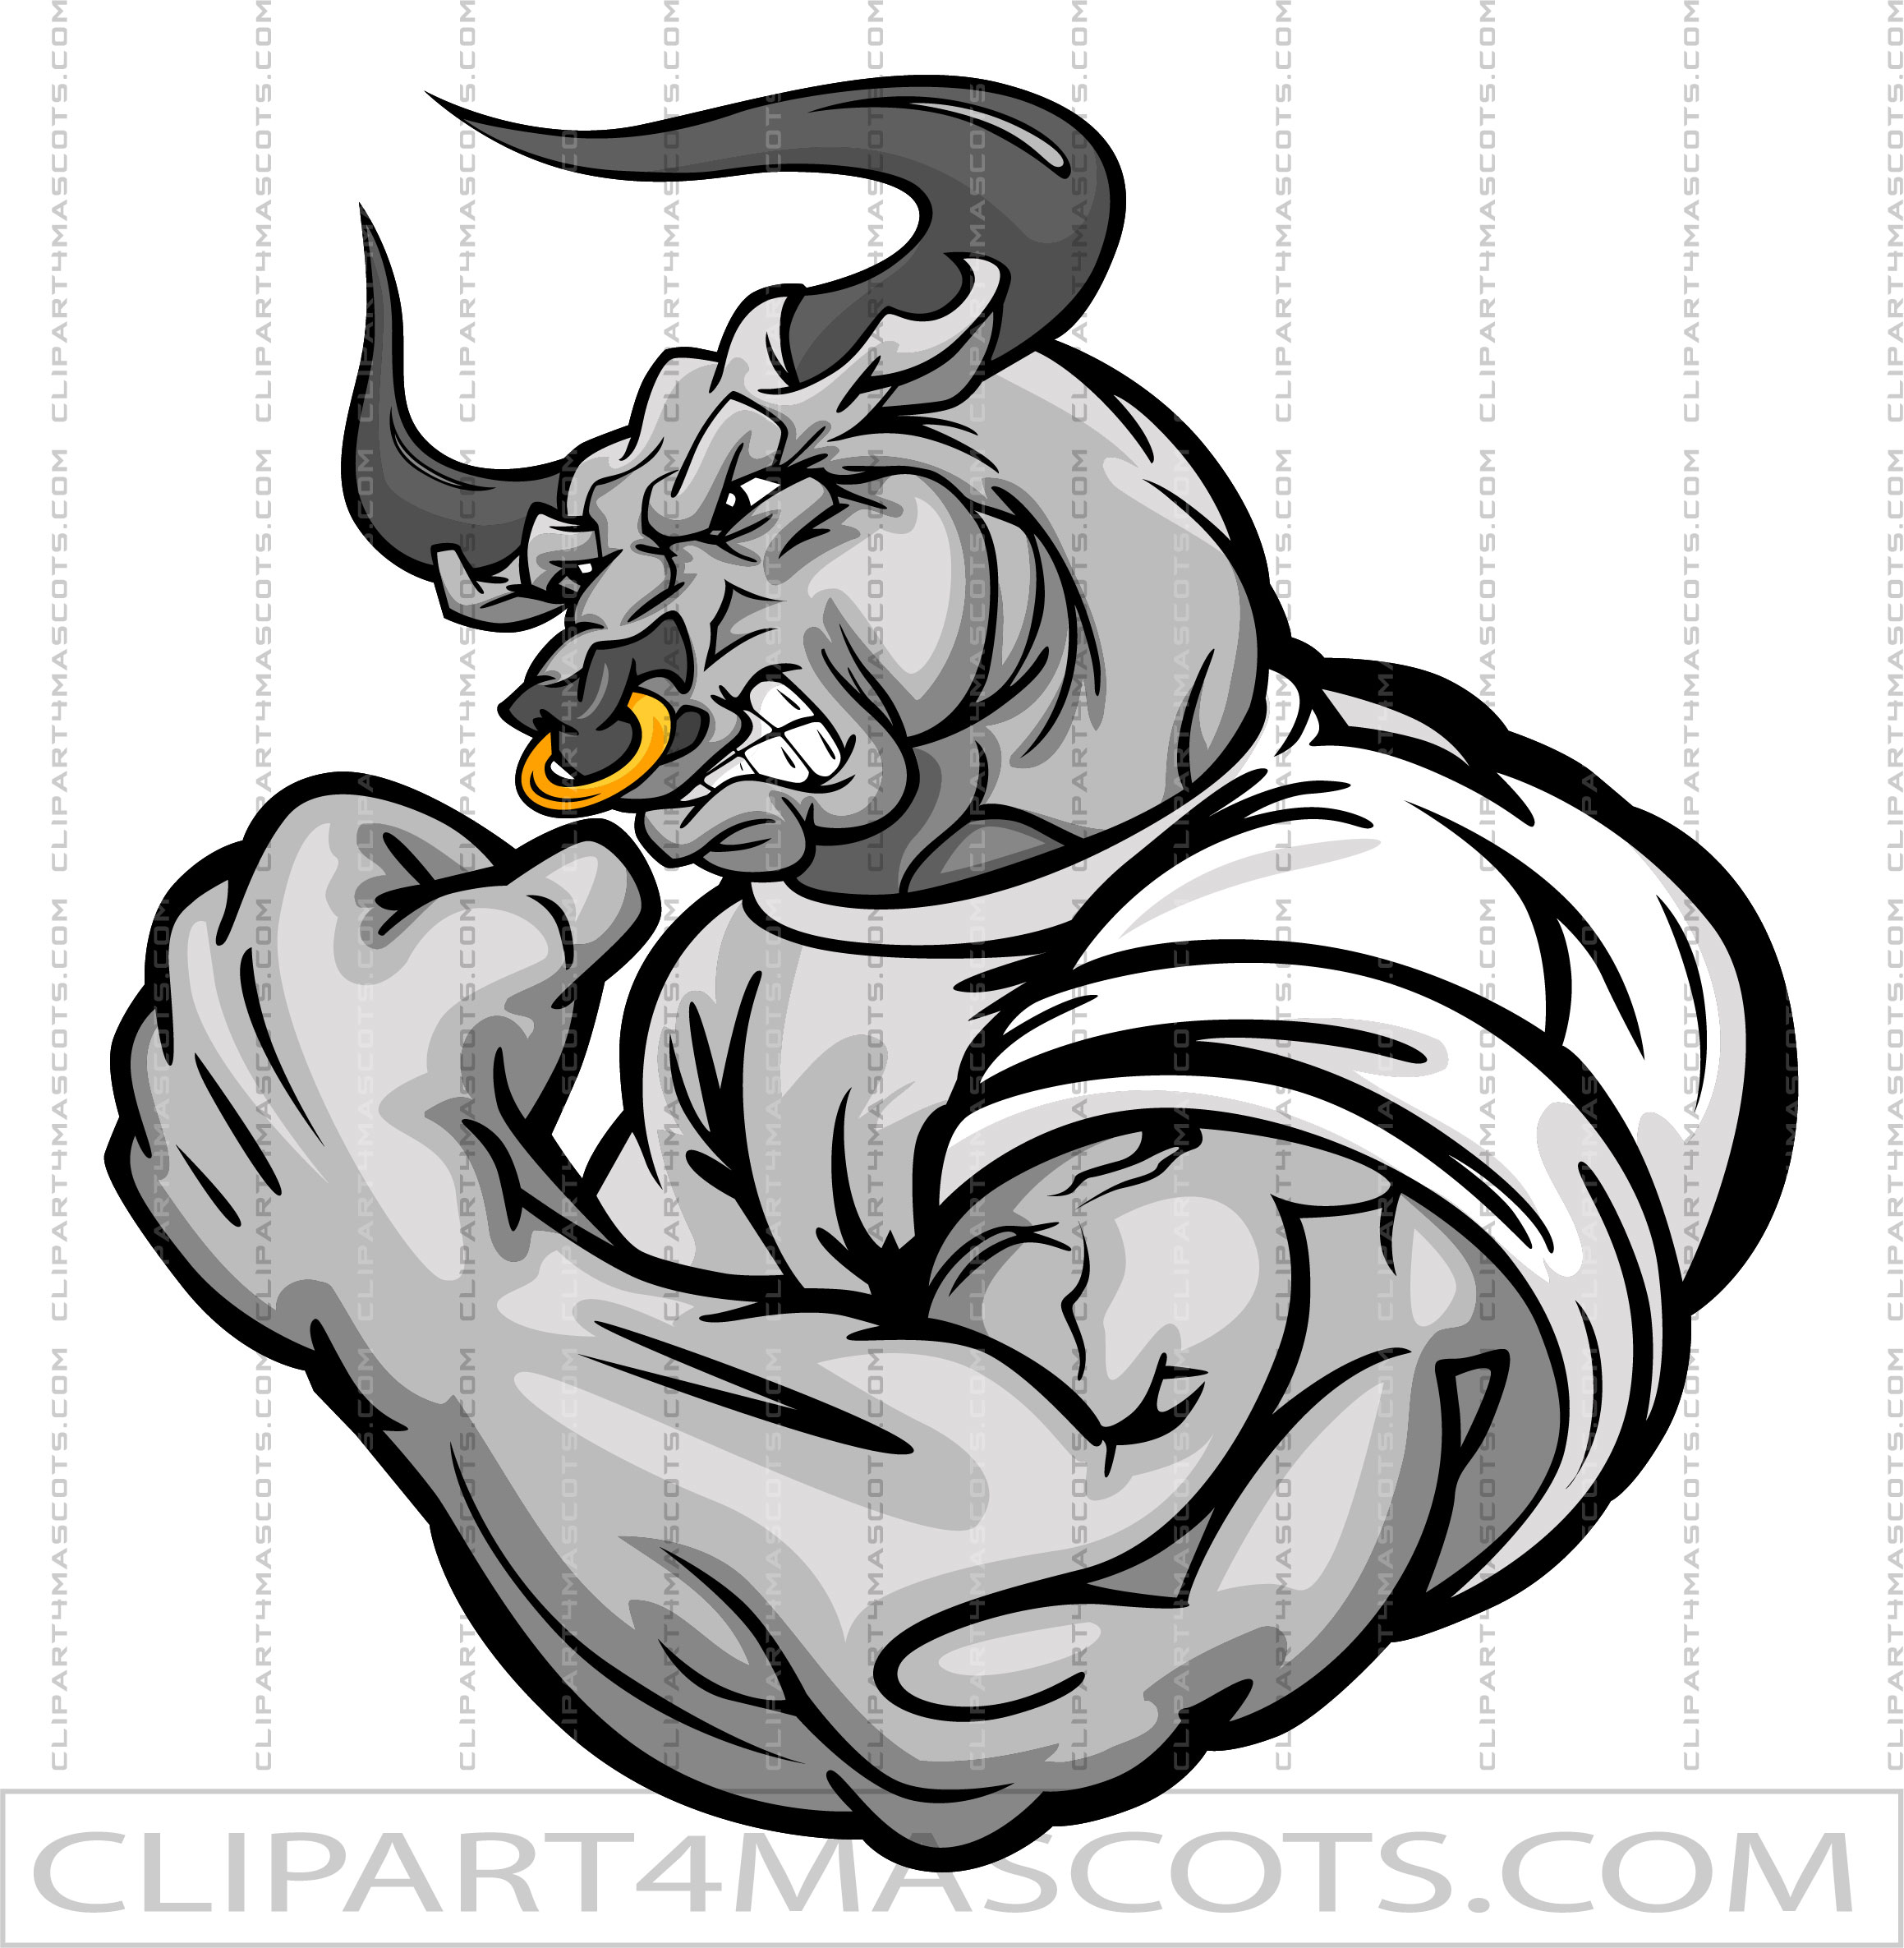 Bull Wrestling Cartoon